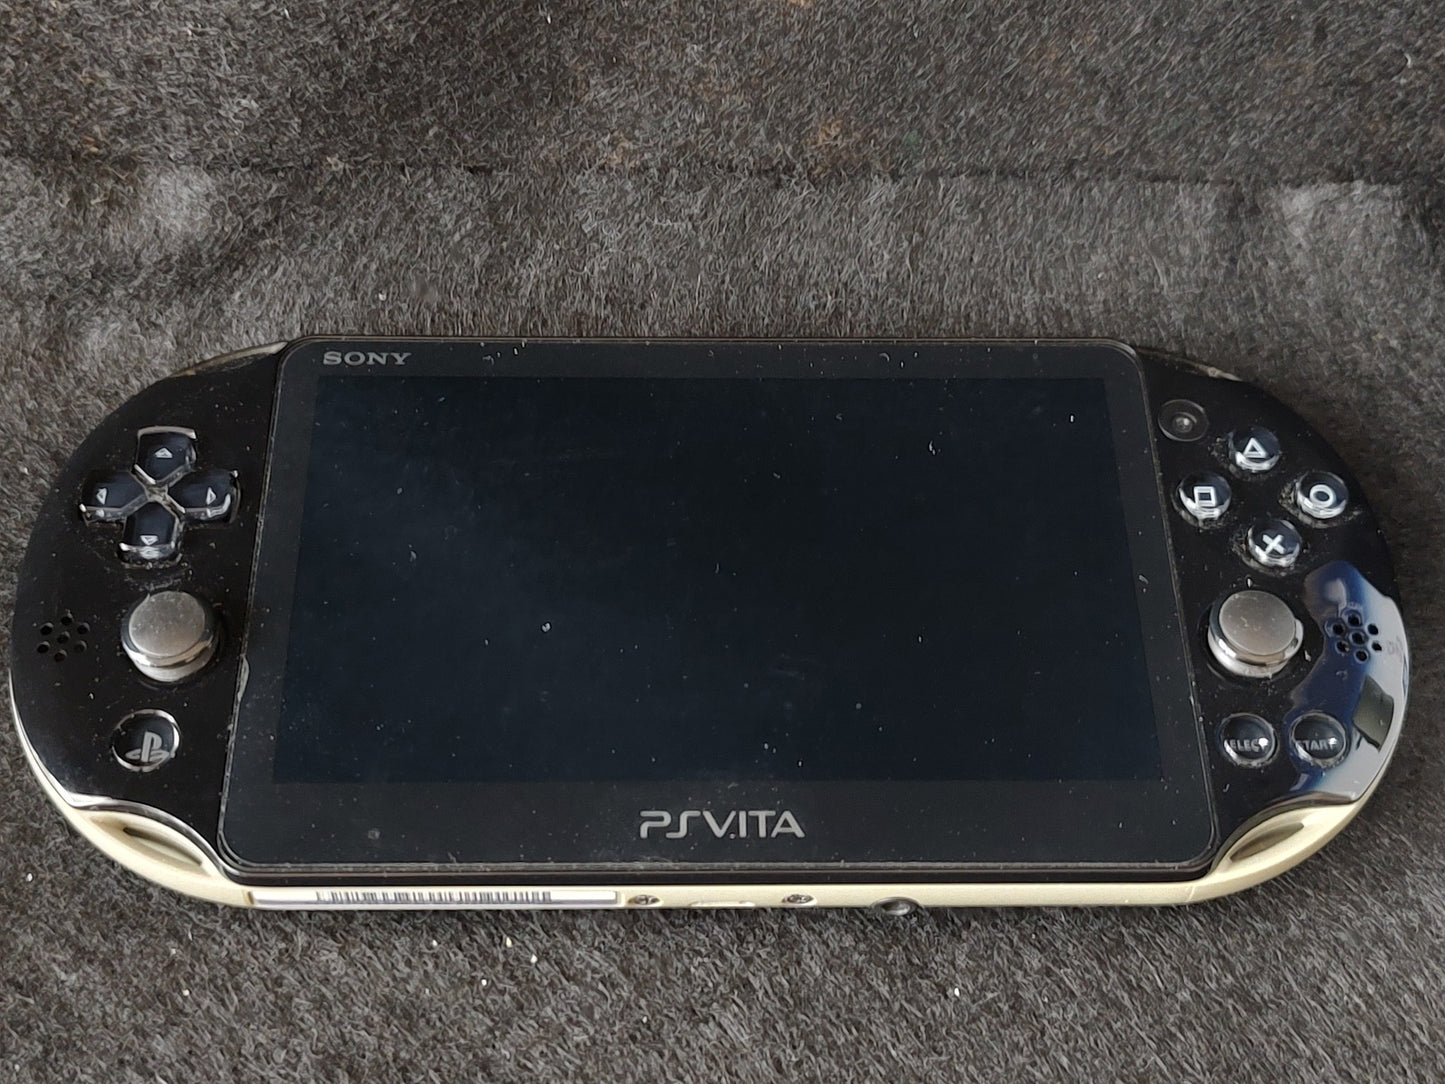 SONY PS Vita PCH-2000 Hhaki Black Console 1GB, w/Manual Box set, Working-g0201-